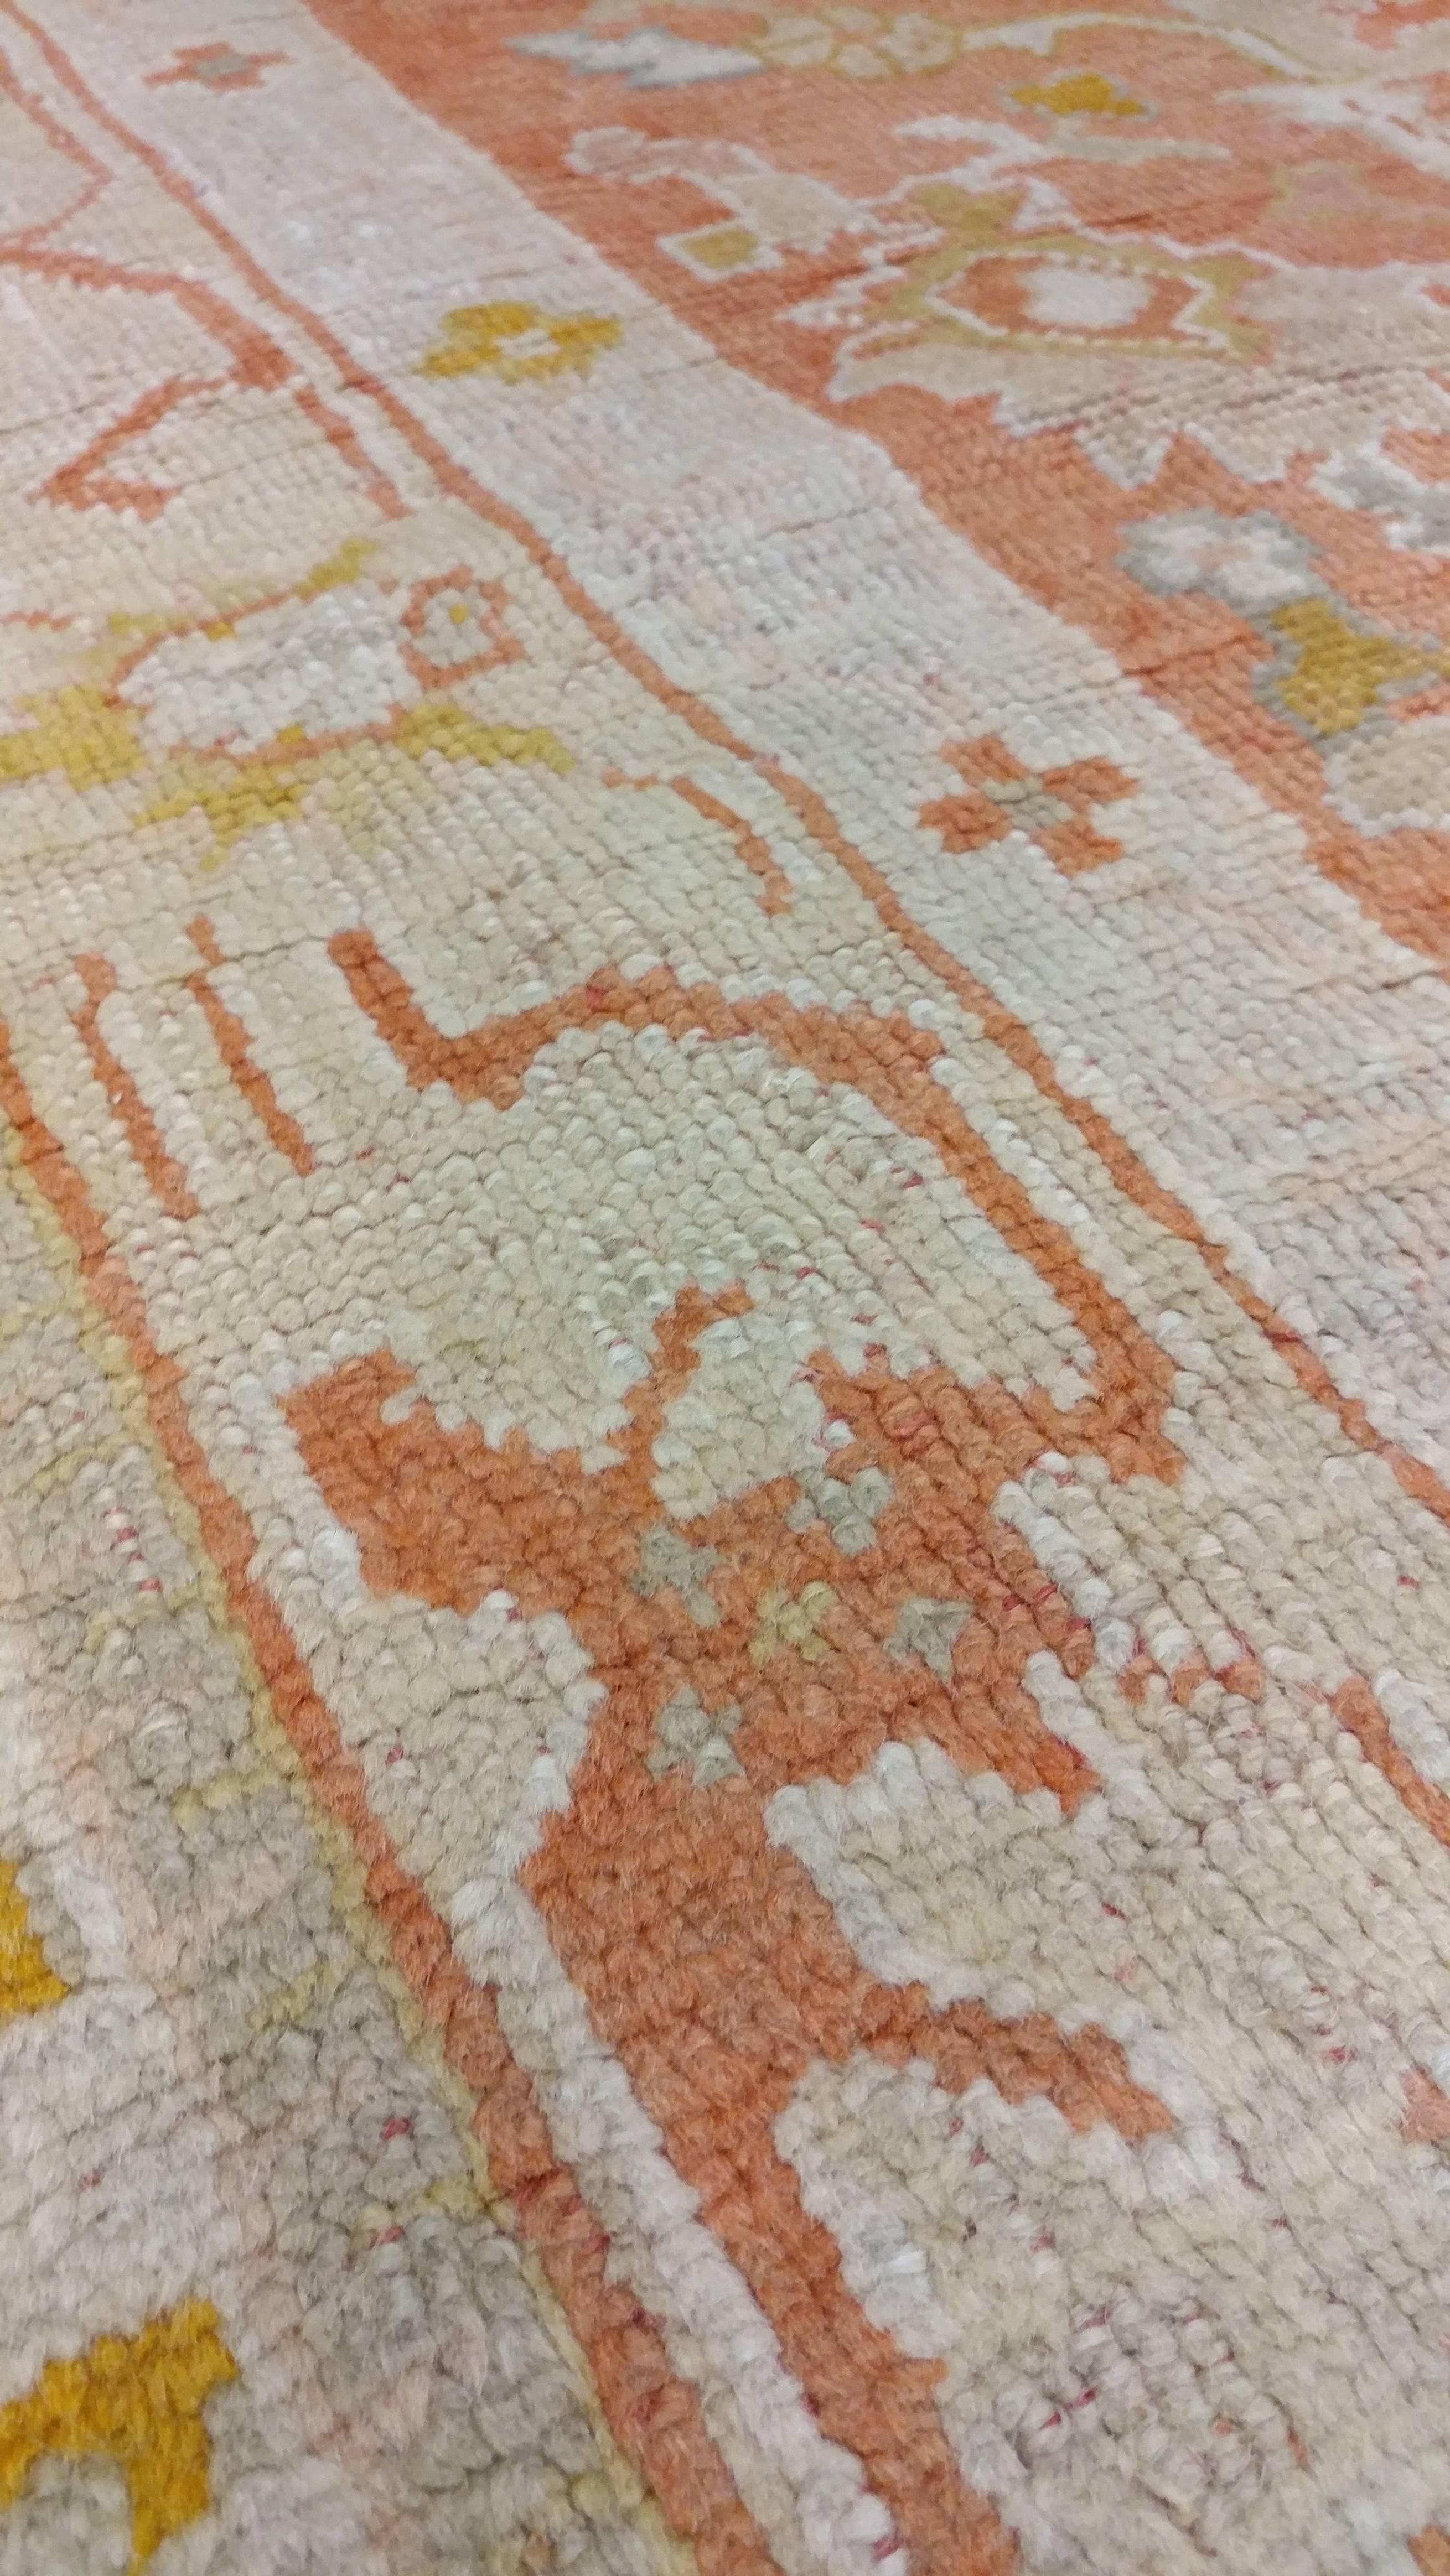 Antique Oushak Turkish Carpet, Handmade Coral, Ivory, Saffron 2